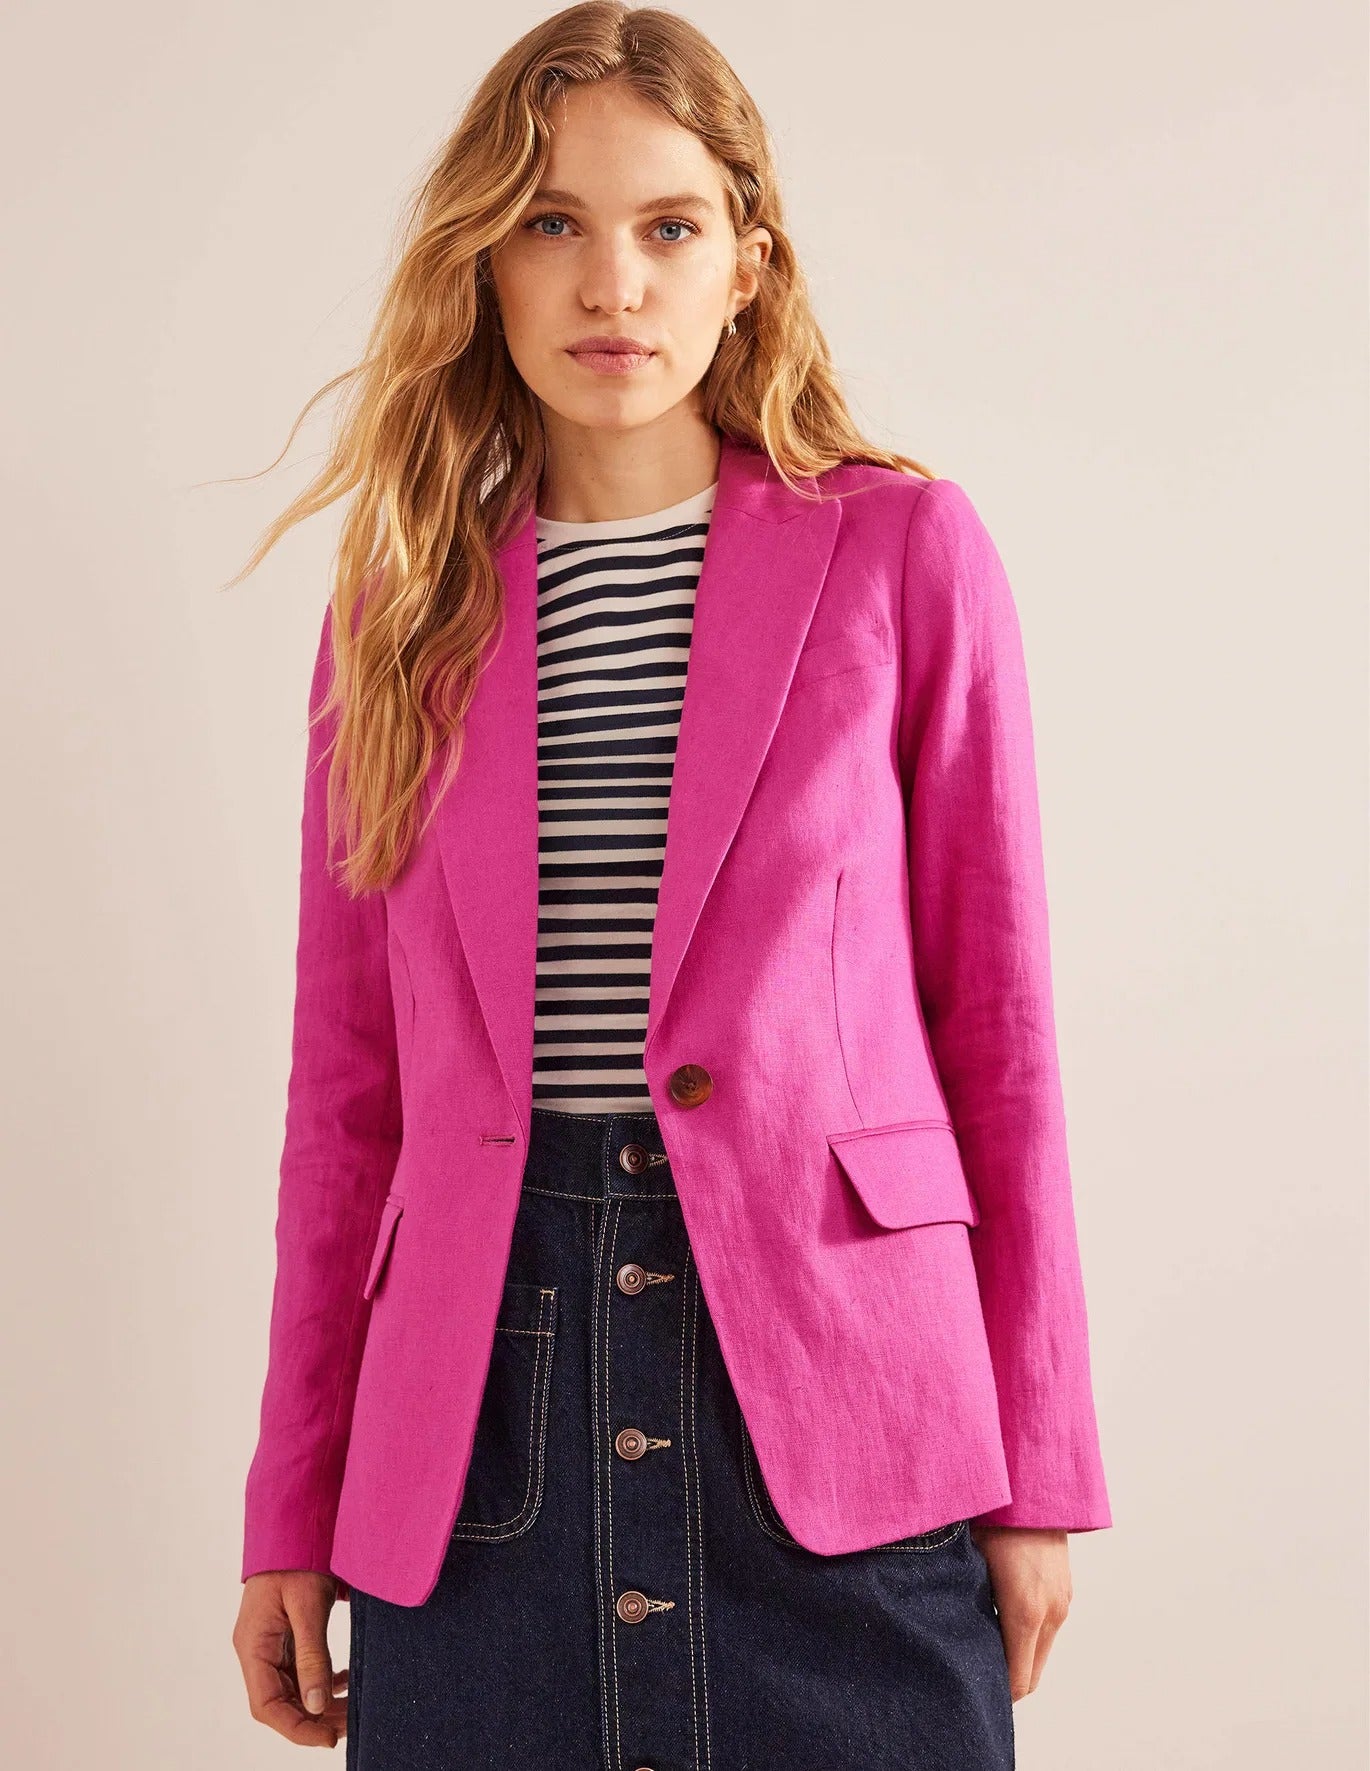 model in hot pink one button blazer